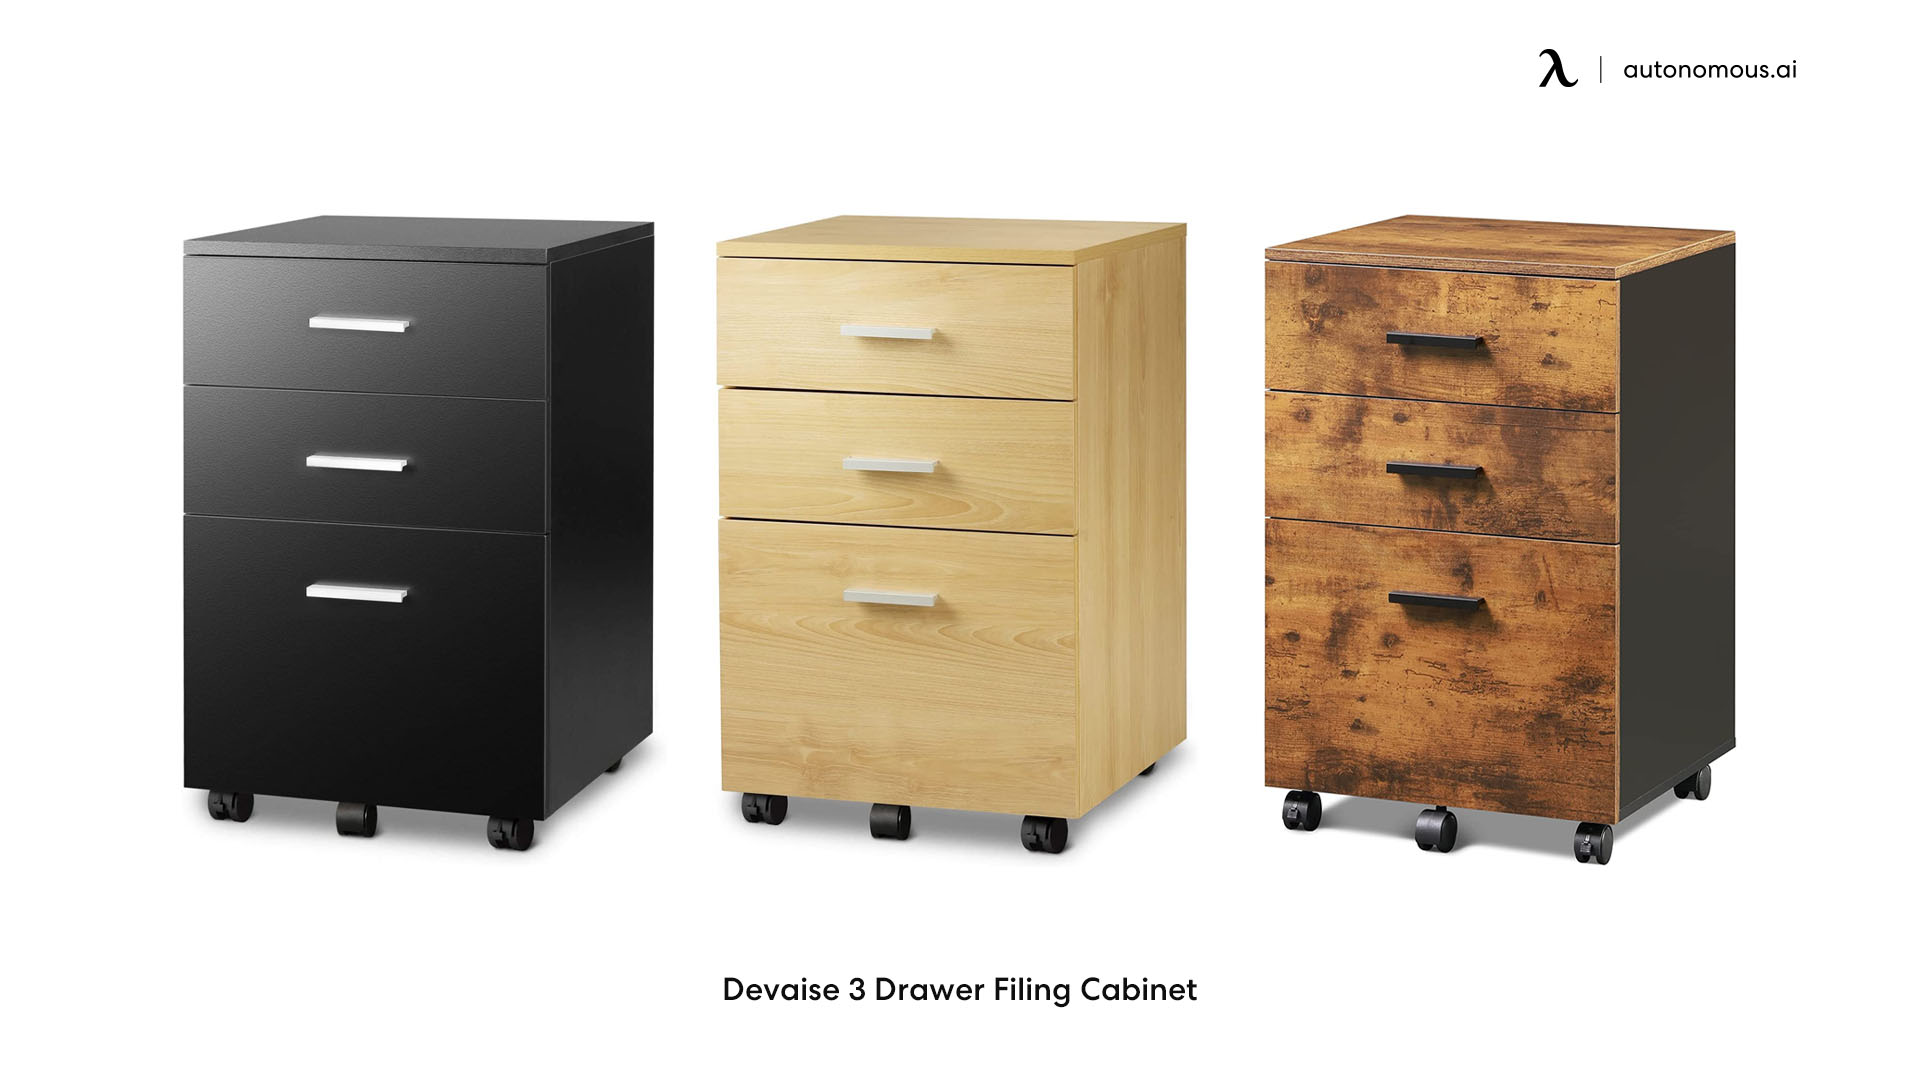 Devaise 3 Drawer Filing Cabinet